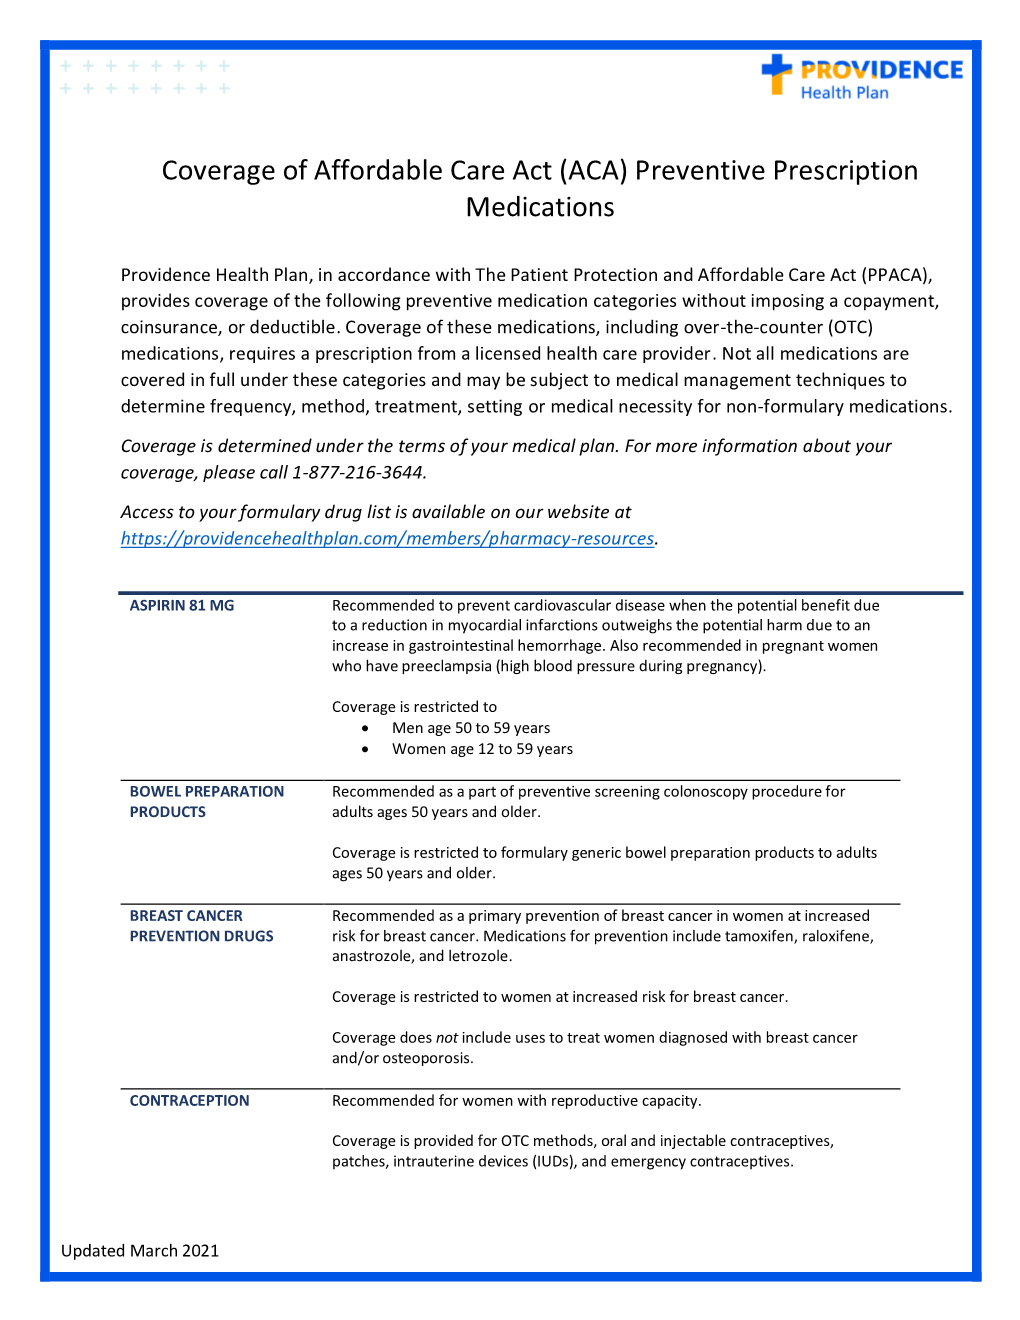 Coverage of Affordable Care Act (ACA) Preventive Prescription Medications